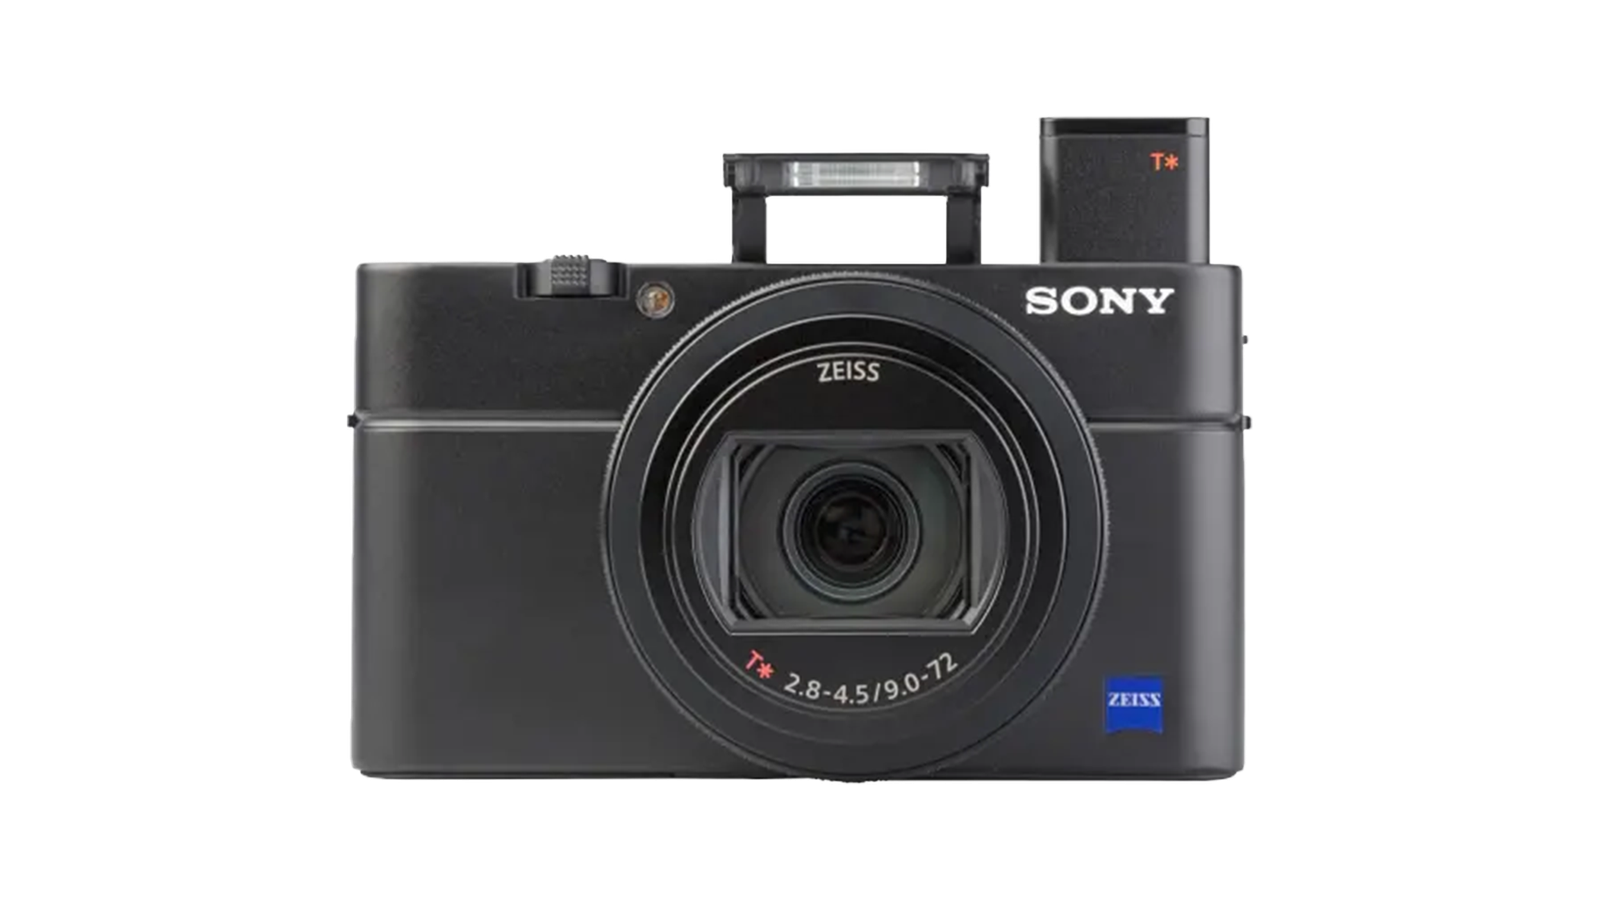 Sony RX100 V - The best budget Sony camera on the market